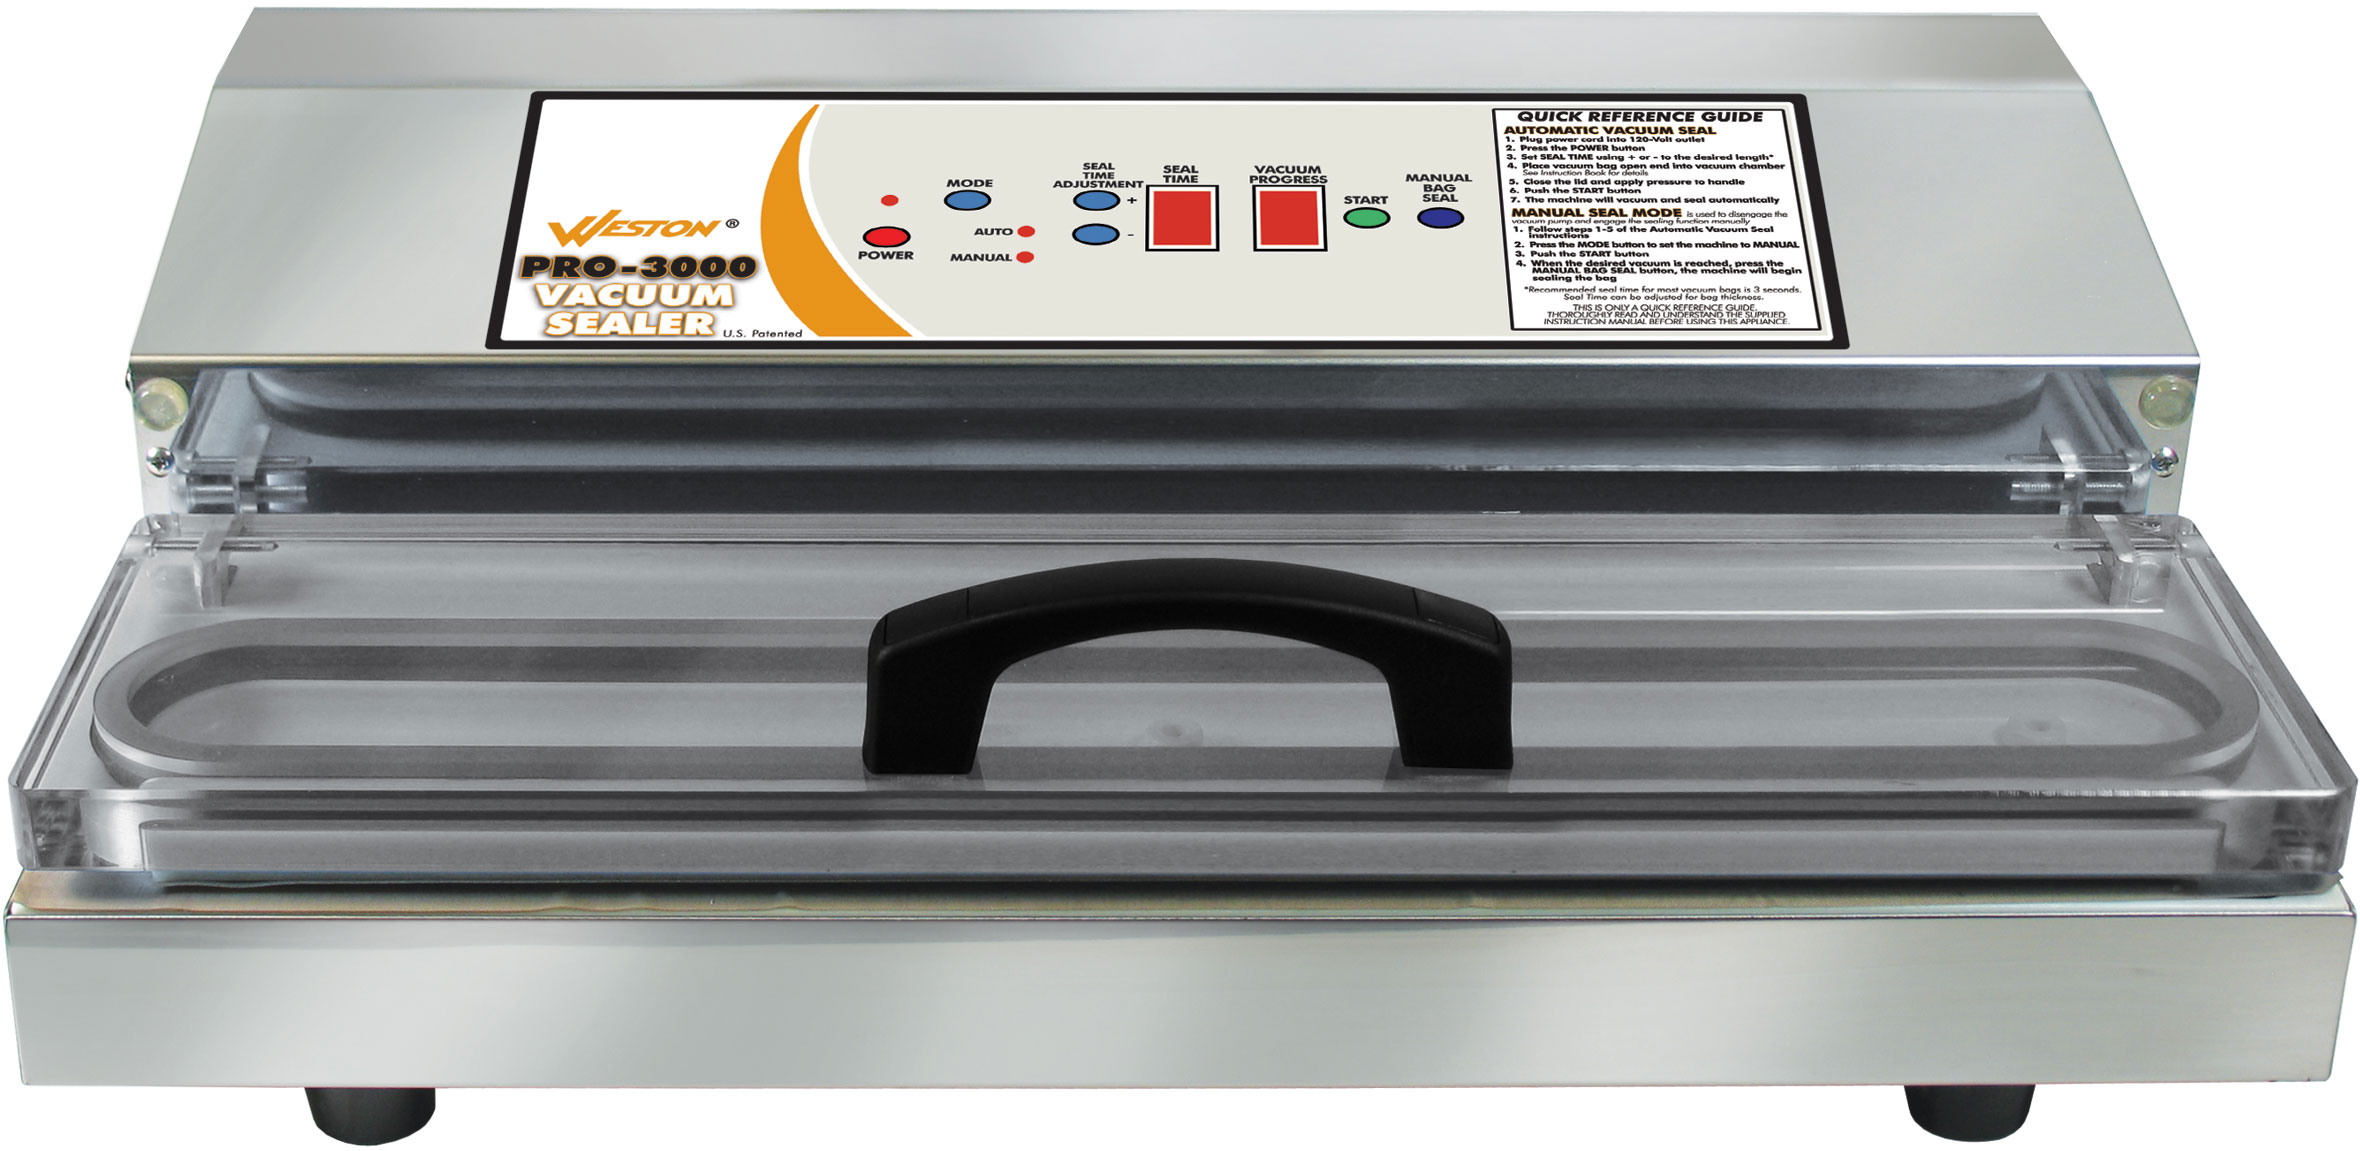 Weston PRO-2600: Stainless Steel Vacuum Sealer